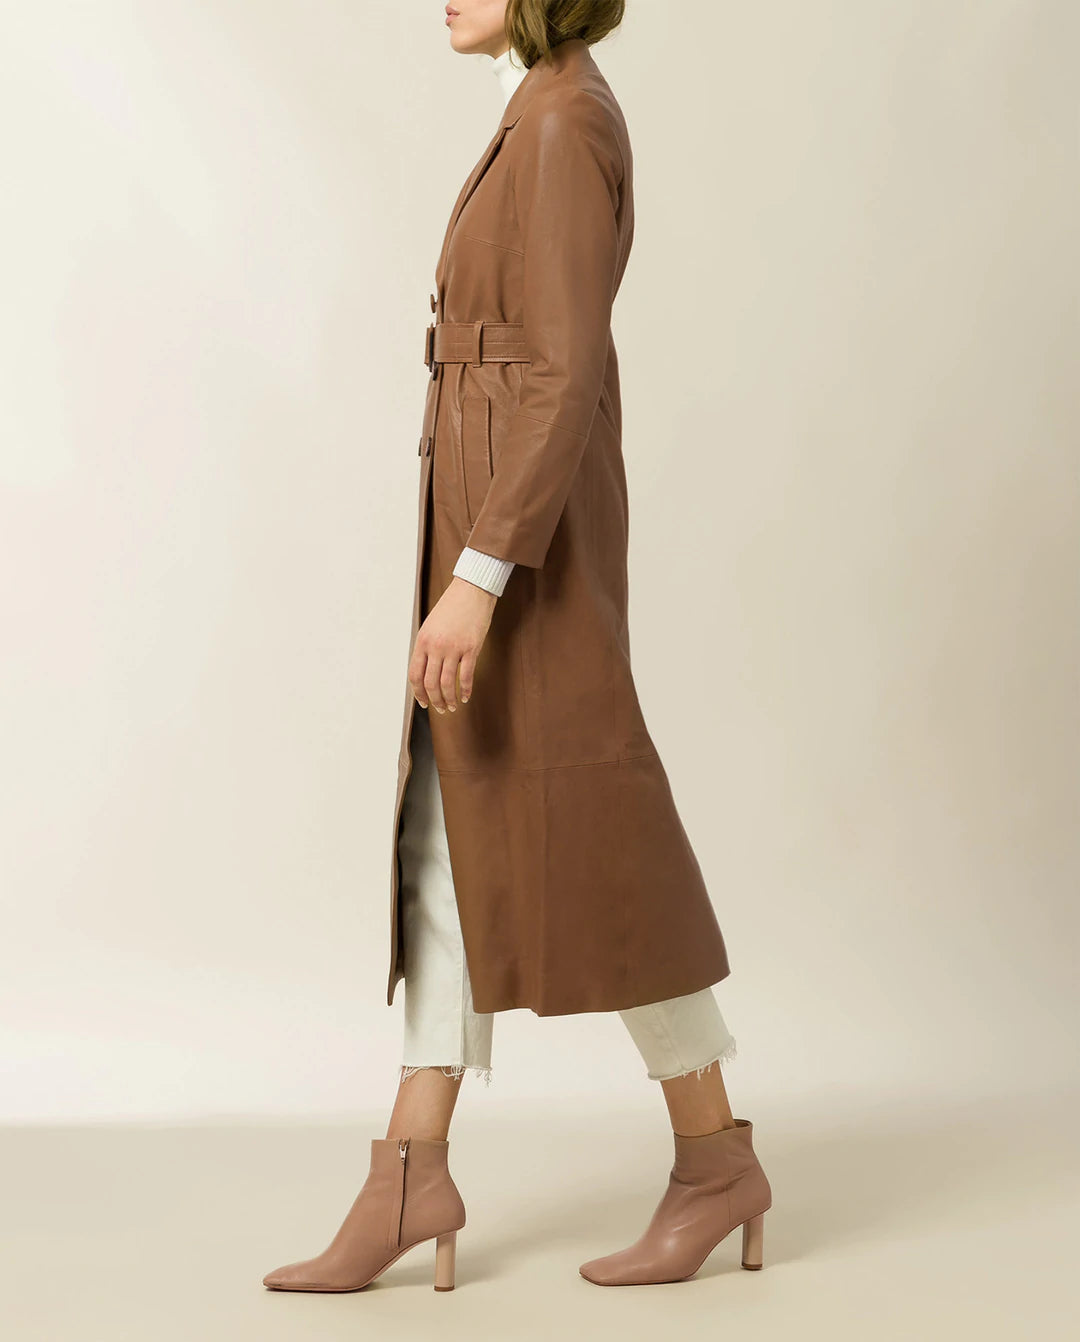 Lionne Leather Trenchcoat in hazelnut